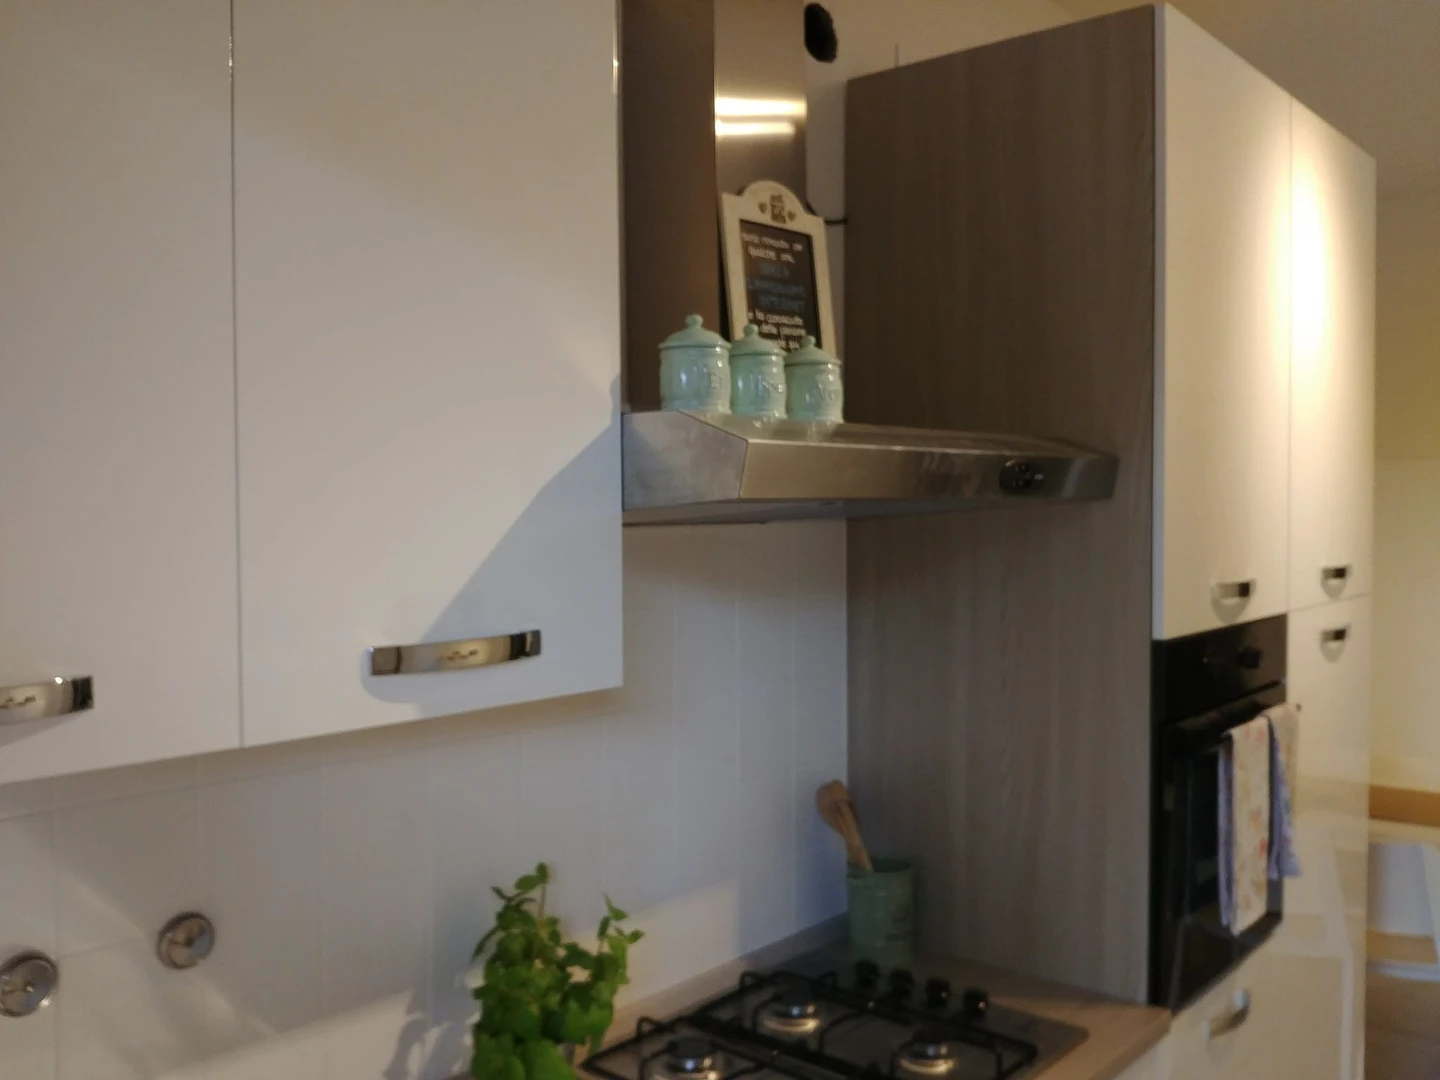 Shared room in 3-bedroom flat Padova